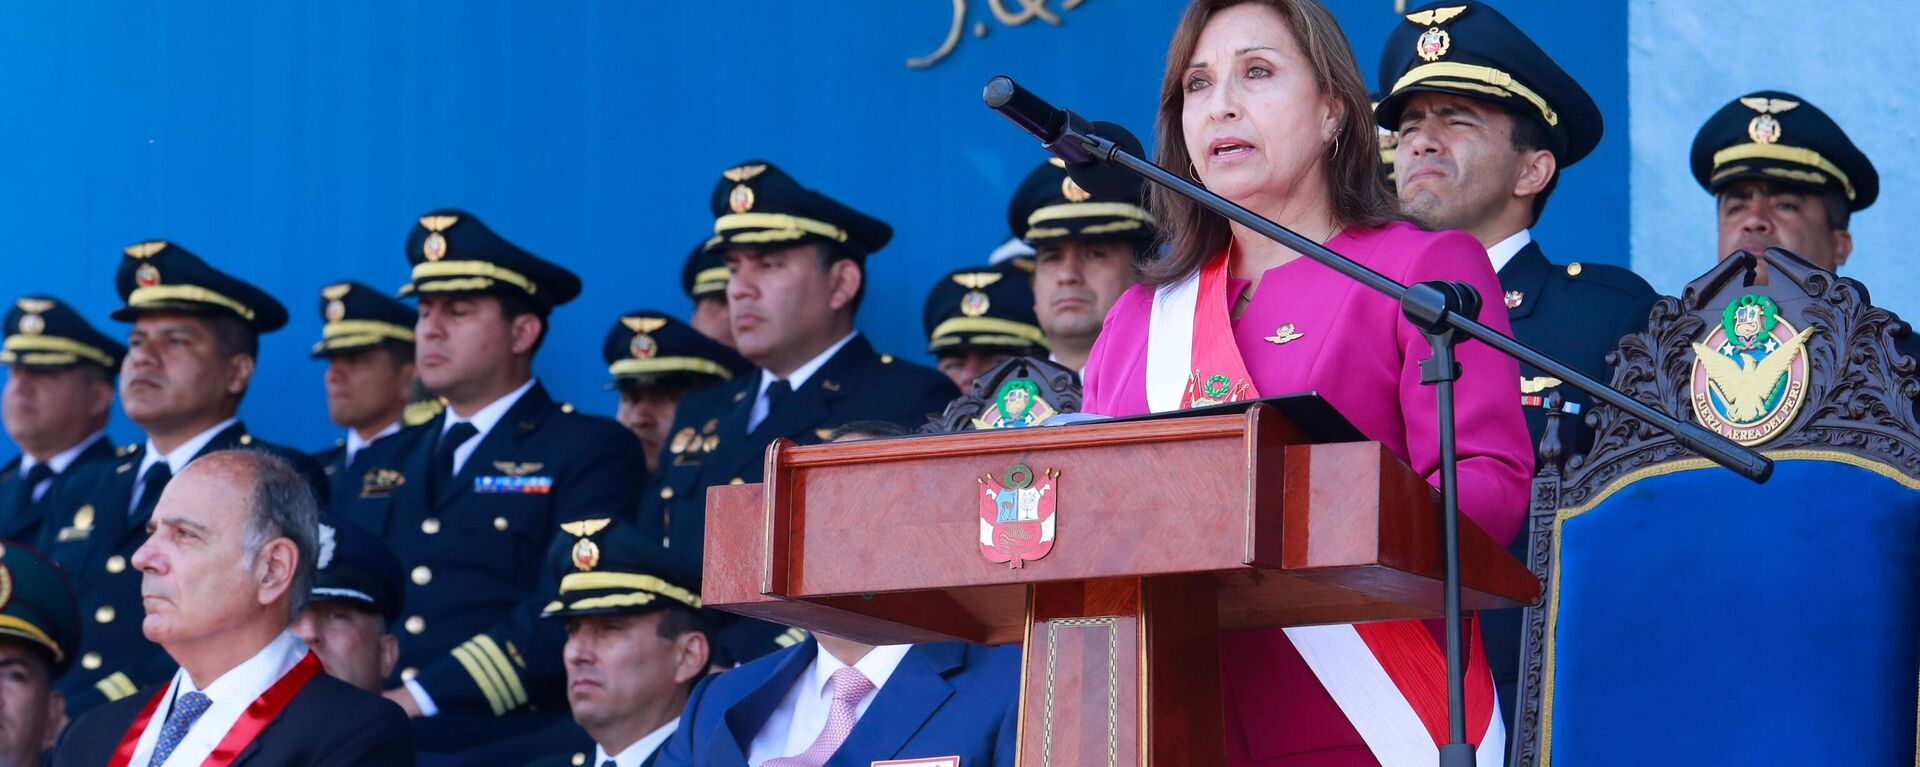 La presidenta peruana, Dina Boluarte, anuncia las últimas decisiones del gobierno - Sputnik Mundo, 1920, 11.01.2023